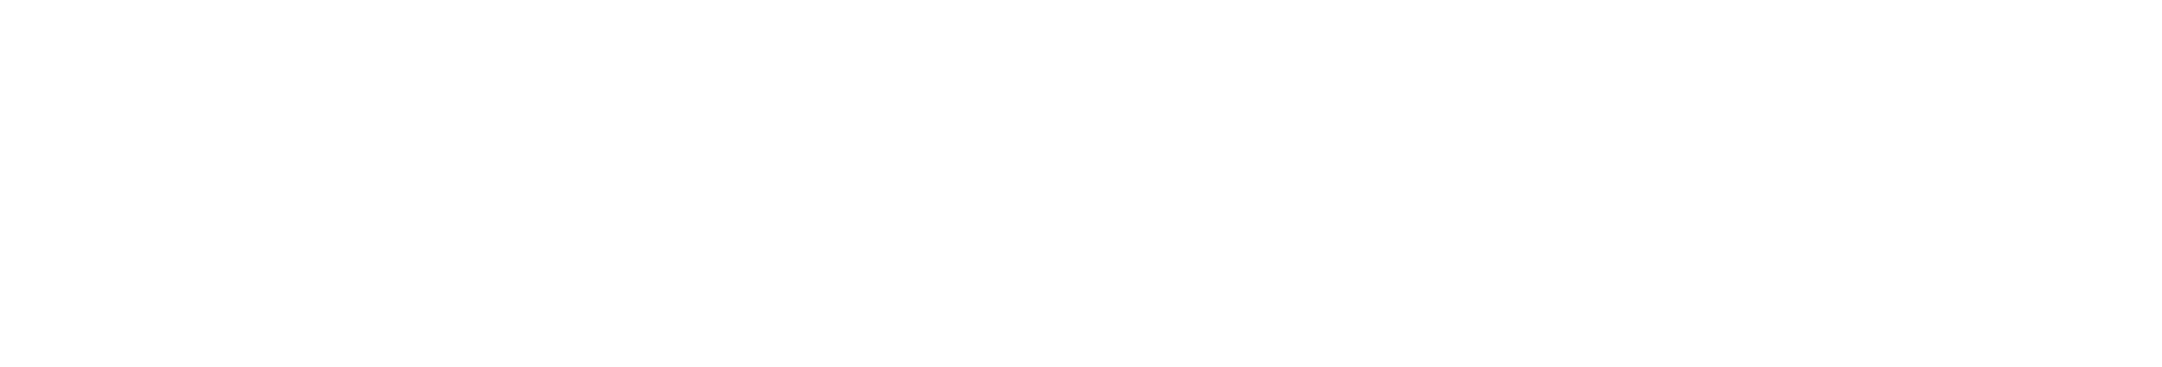 networkerz logo